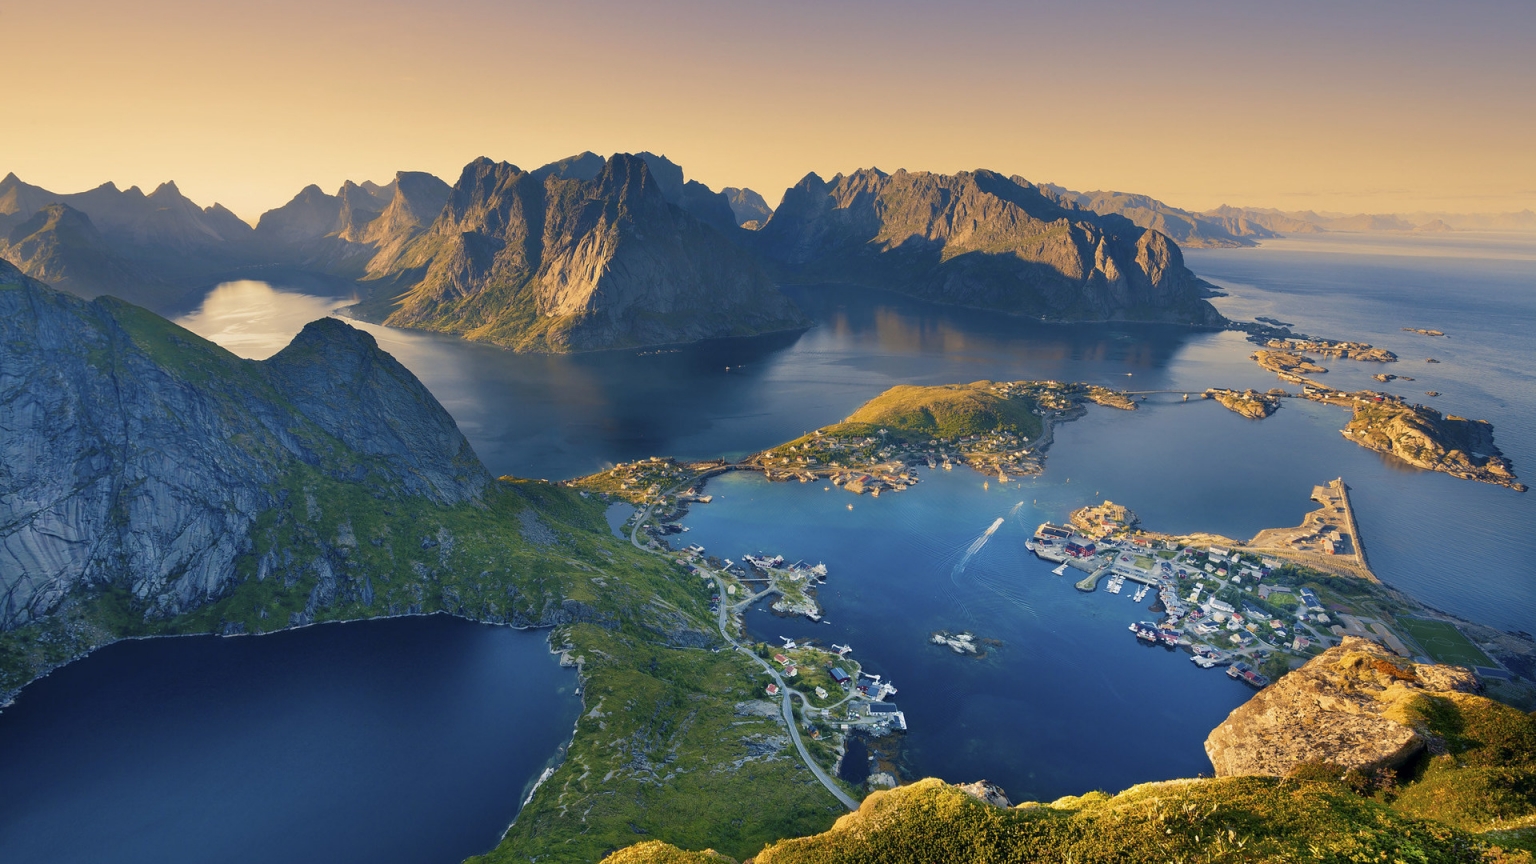  Lofoten Islands Norway for 1536 x 864 HDTV resolution